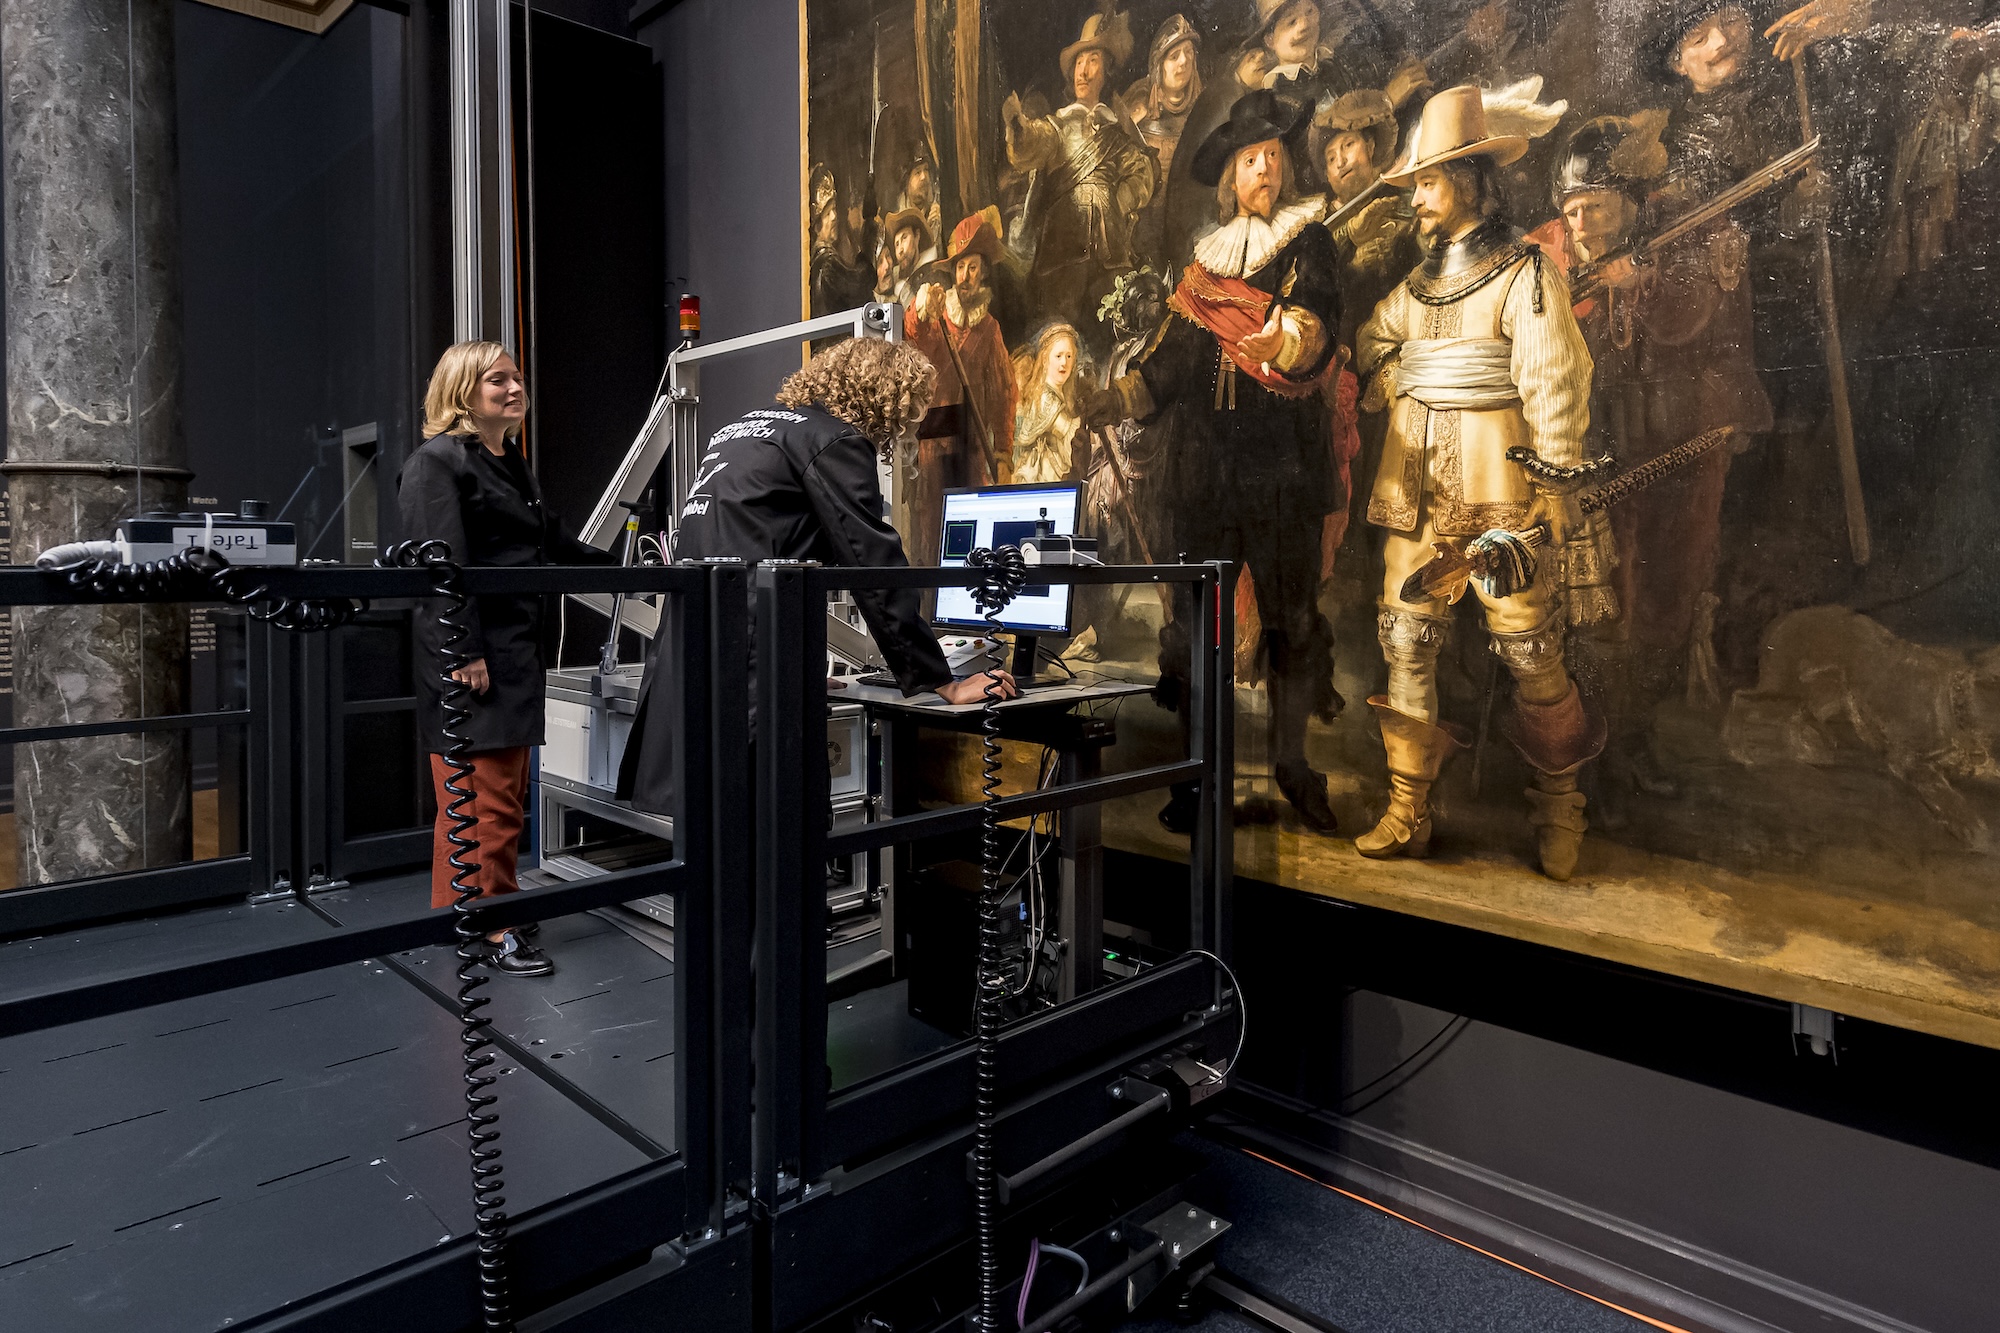 Operation Night Watch investigation, Rijksmuseum